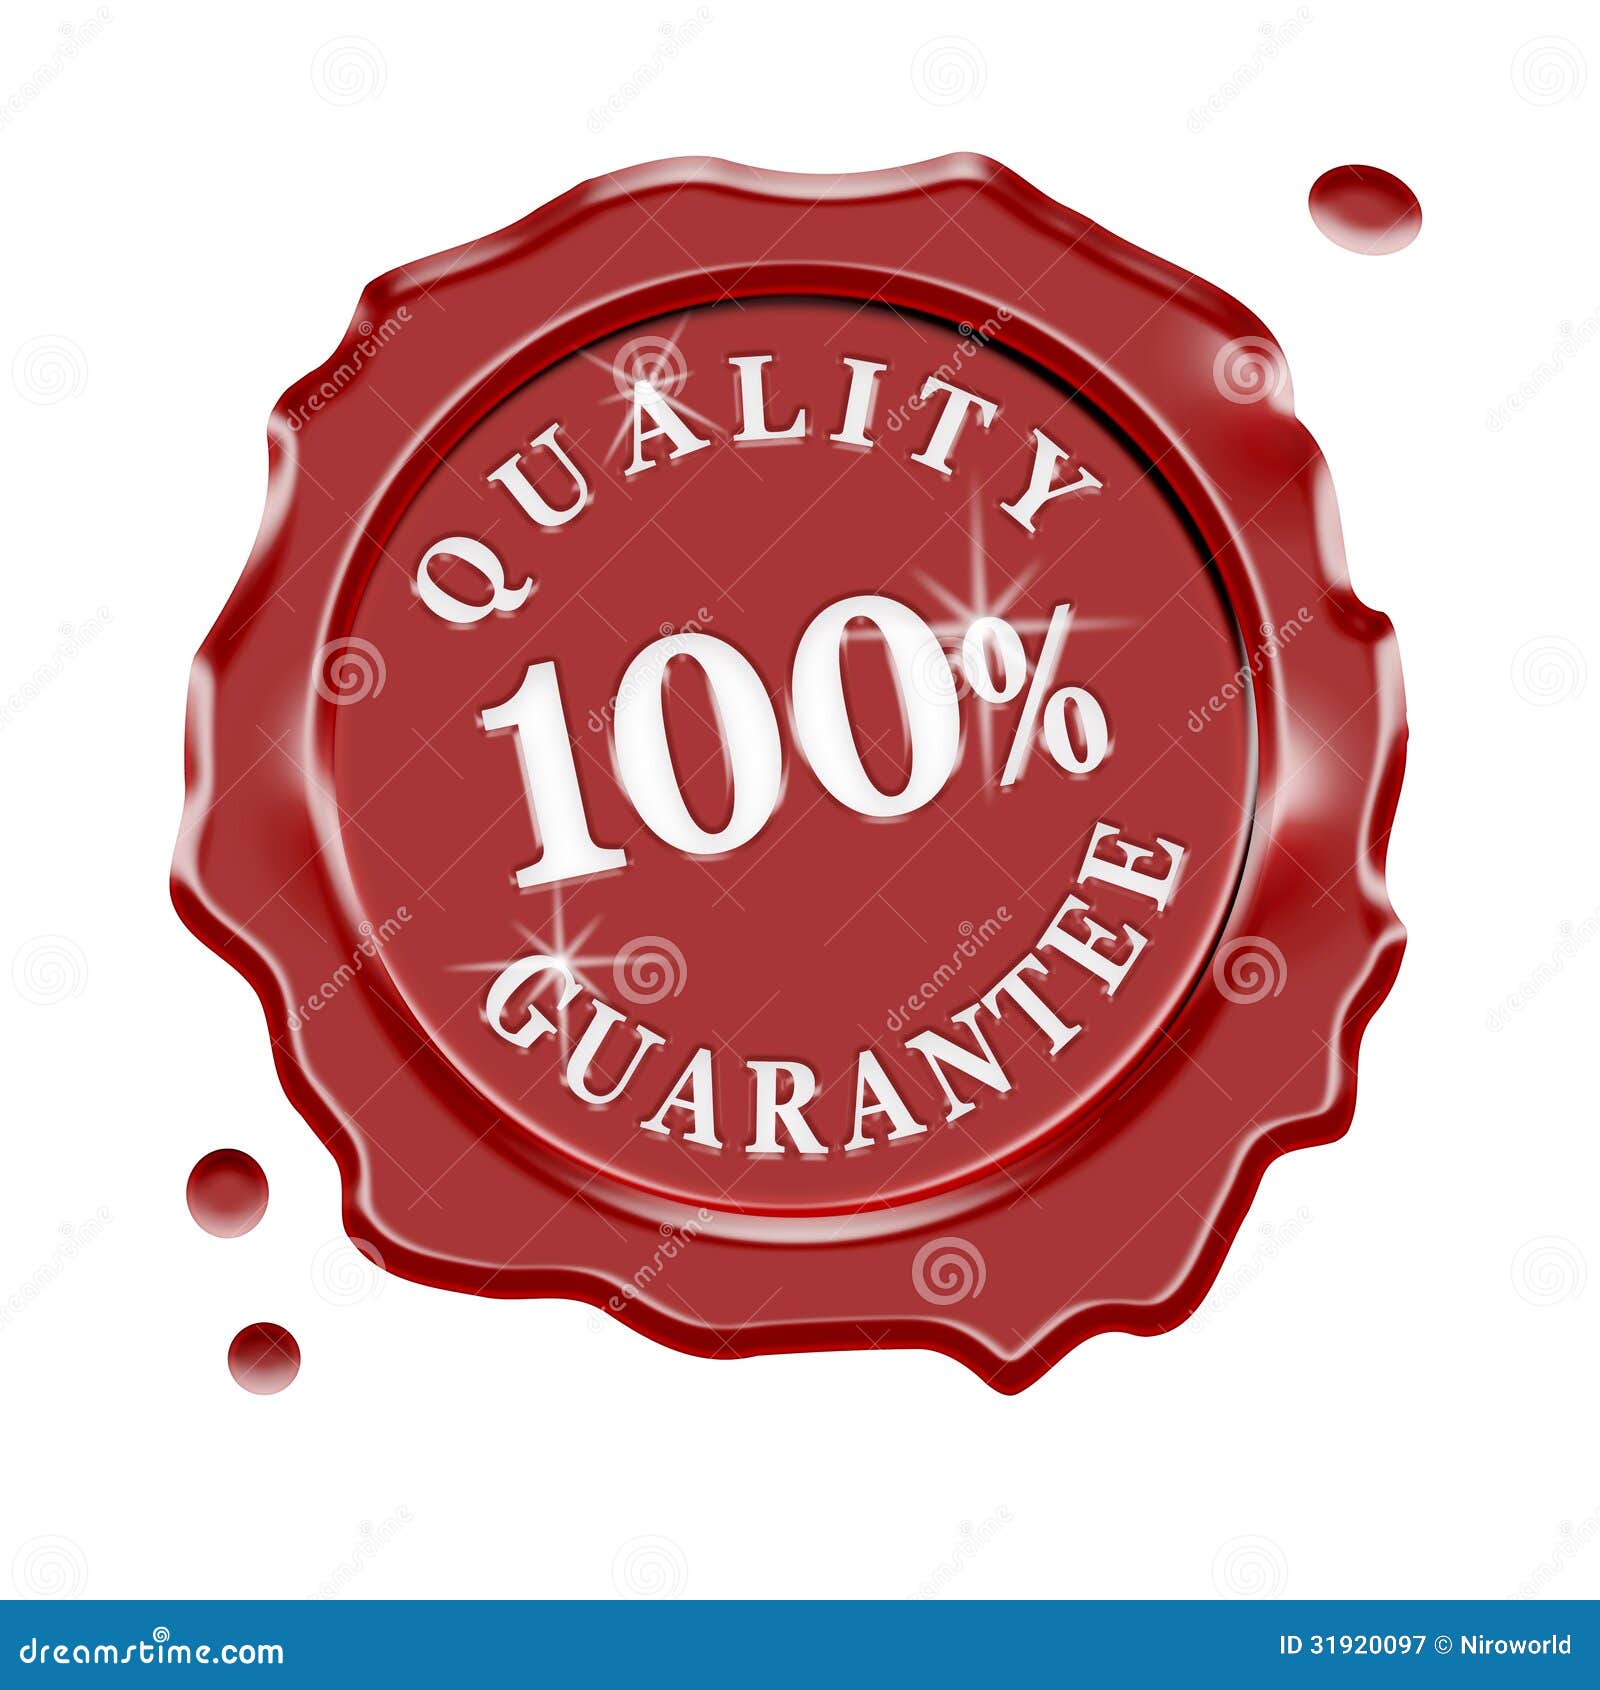 wax seal quality guarantee